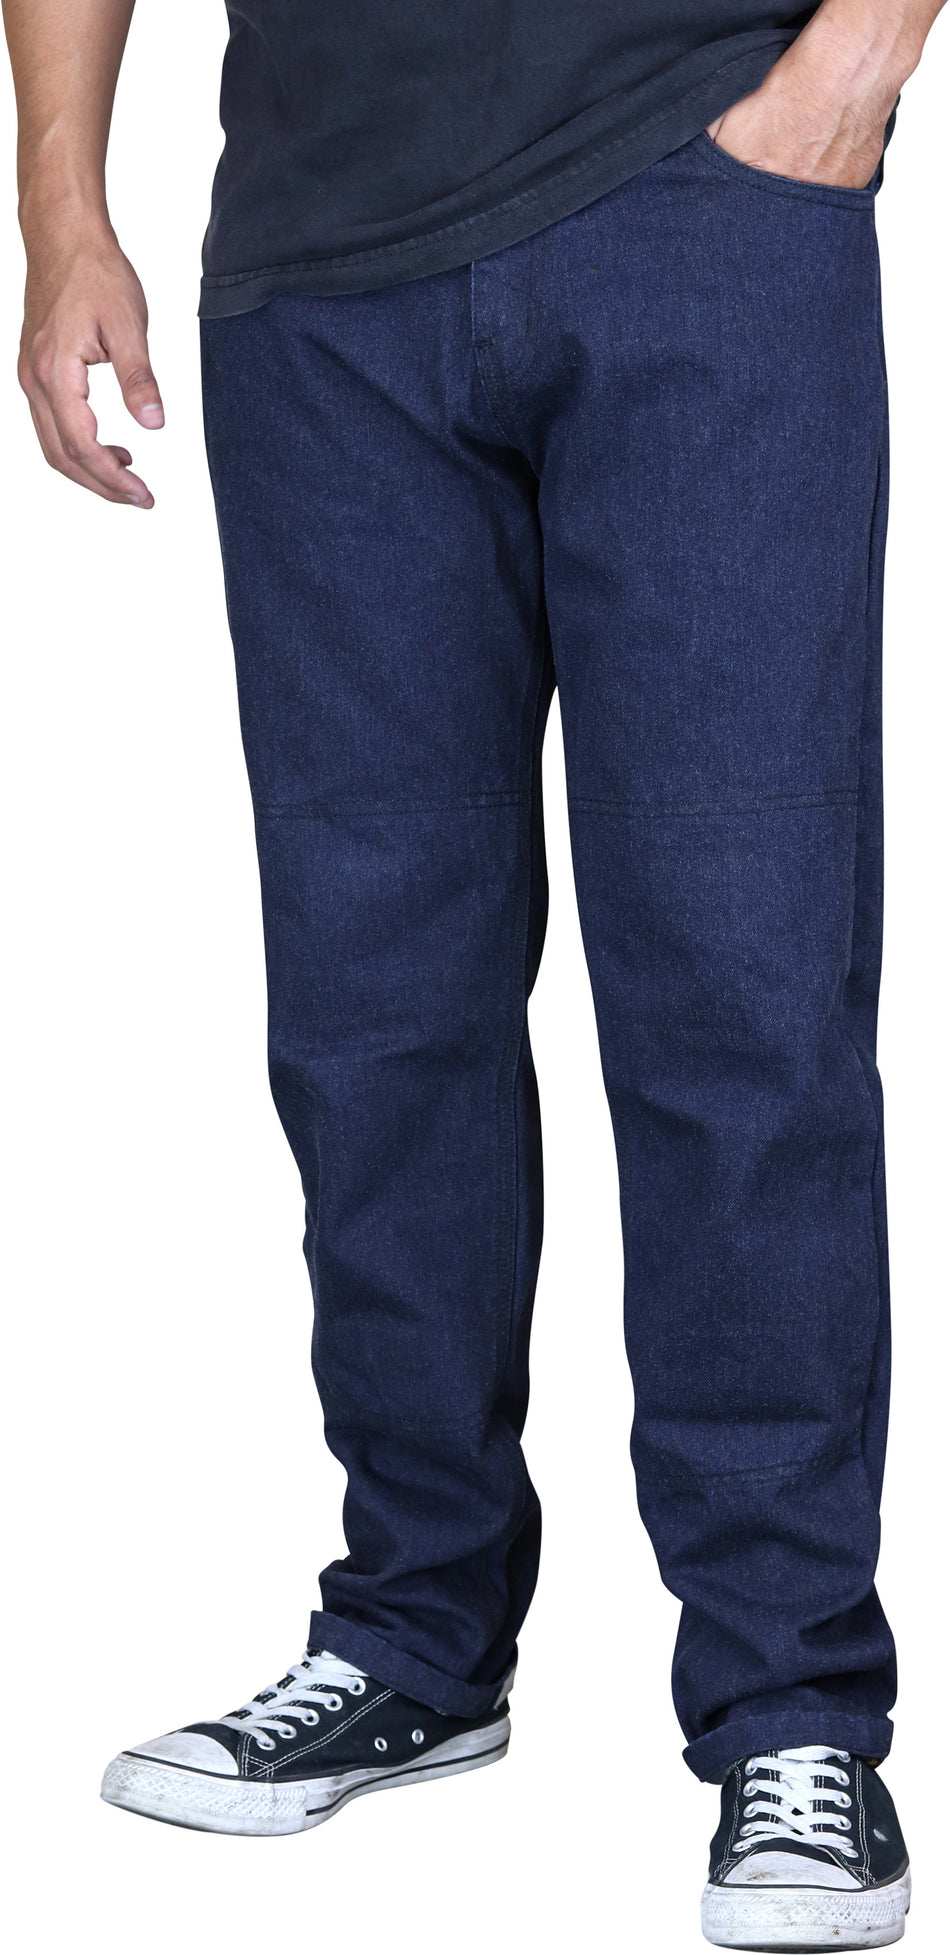 SCORPION EXO Covert Ultra Jeans Blue Size 36 4402-36